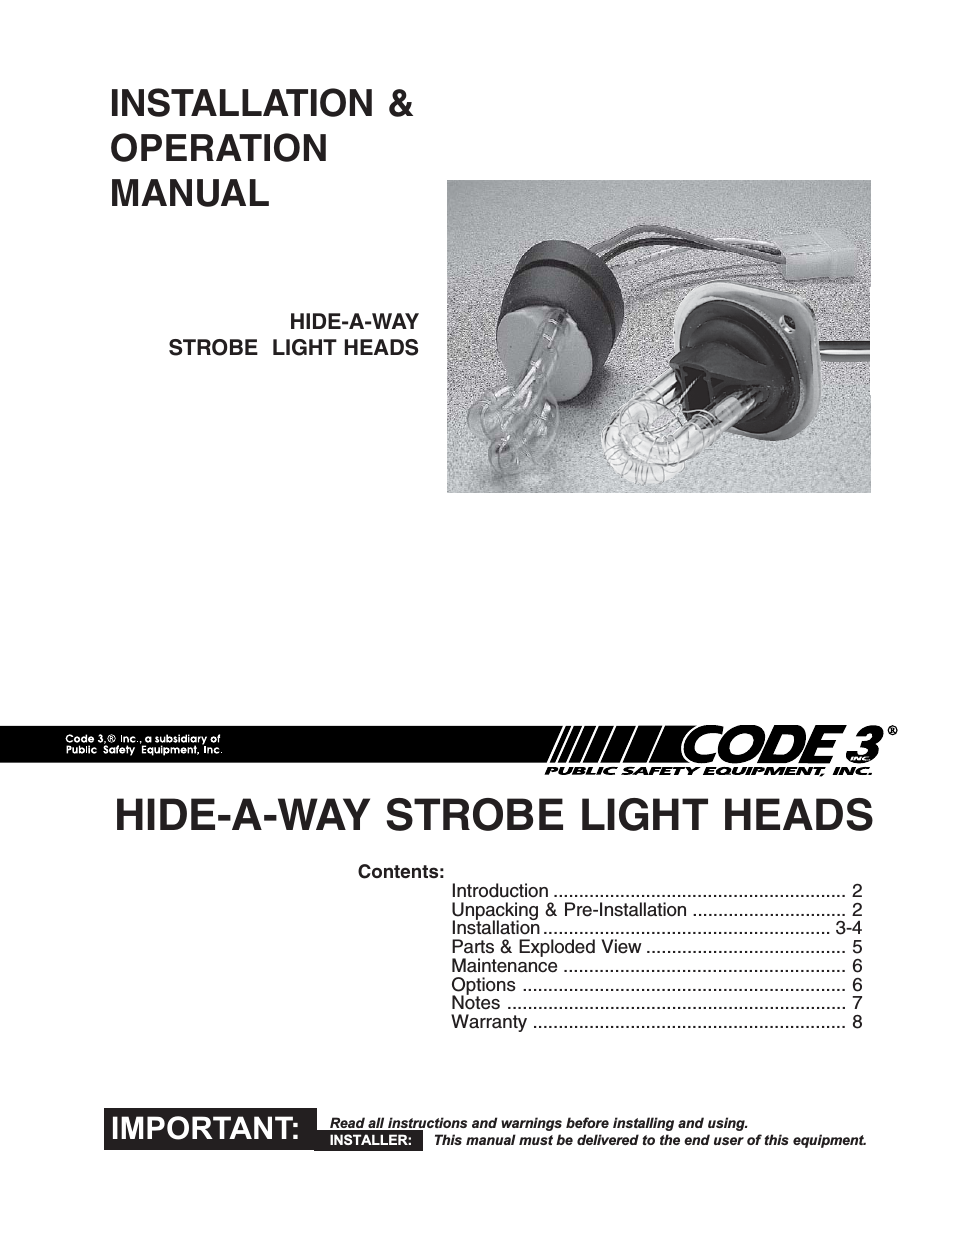 Hide-A-Way Strobe Systems